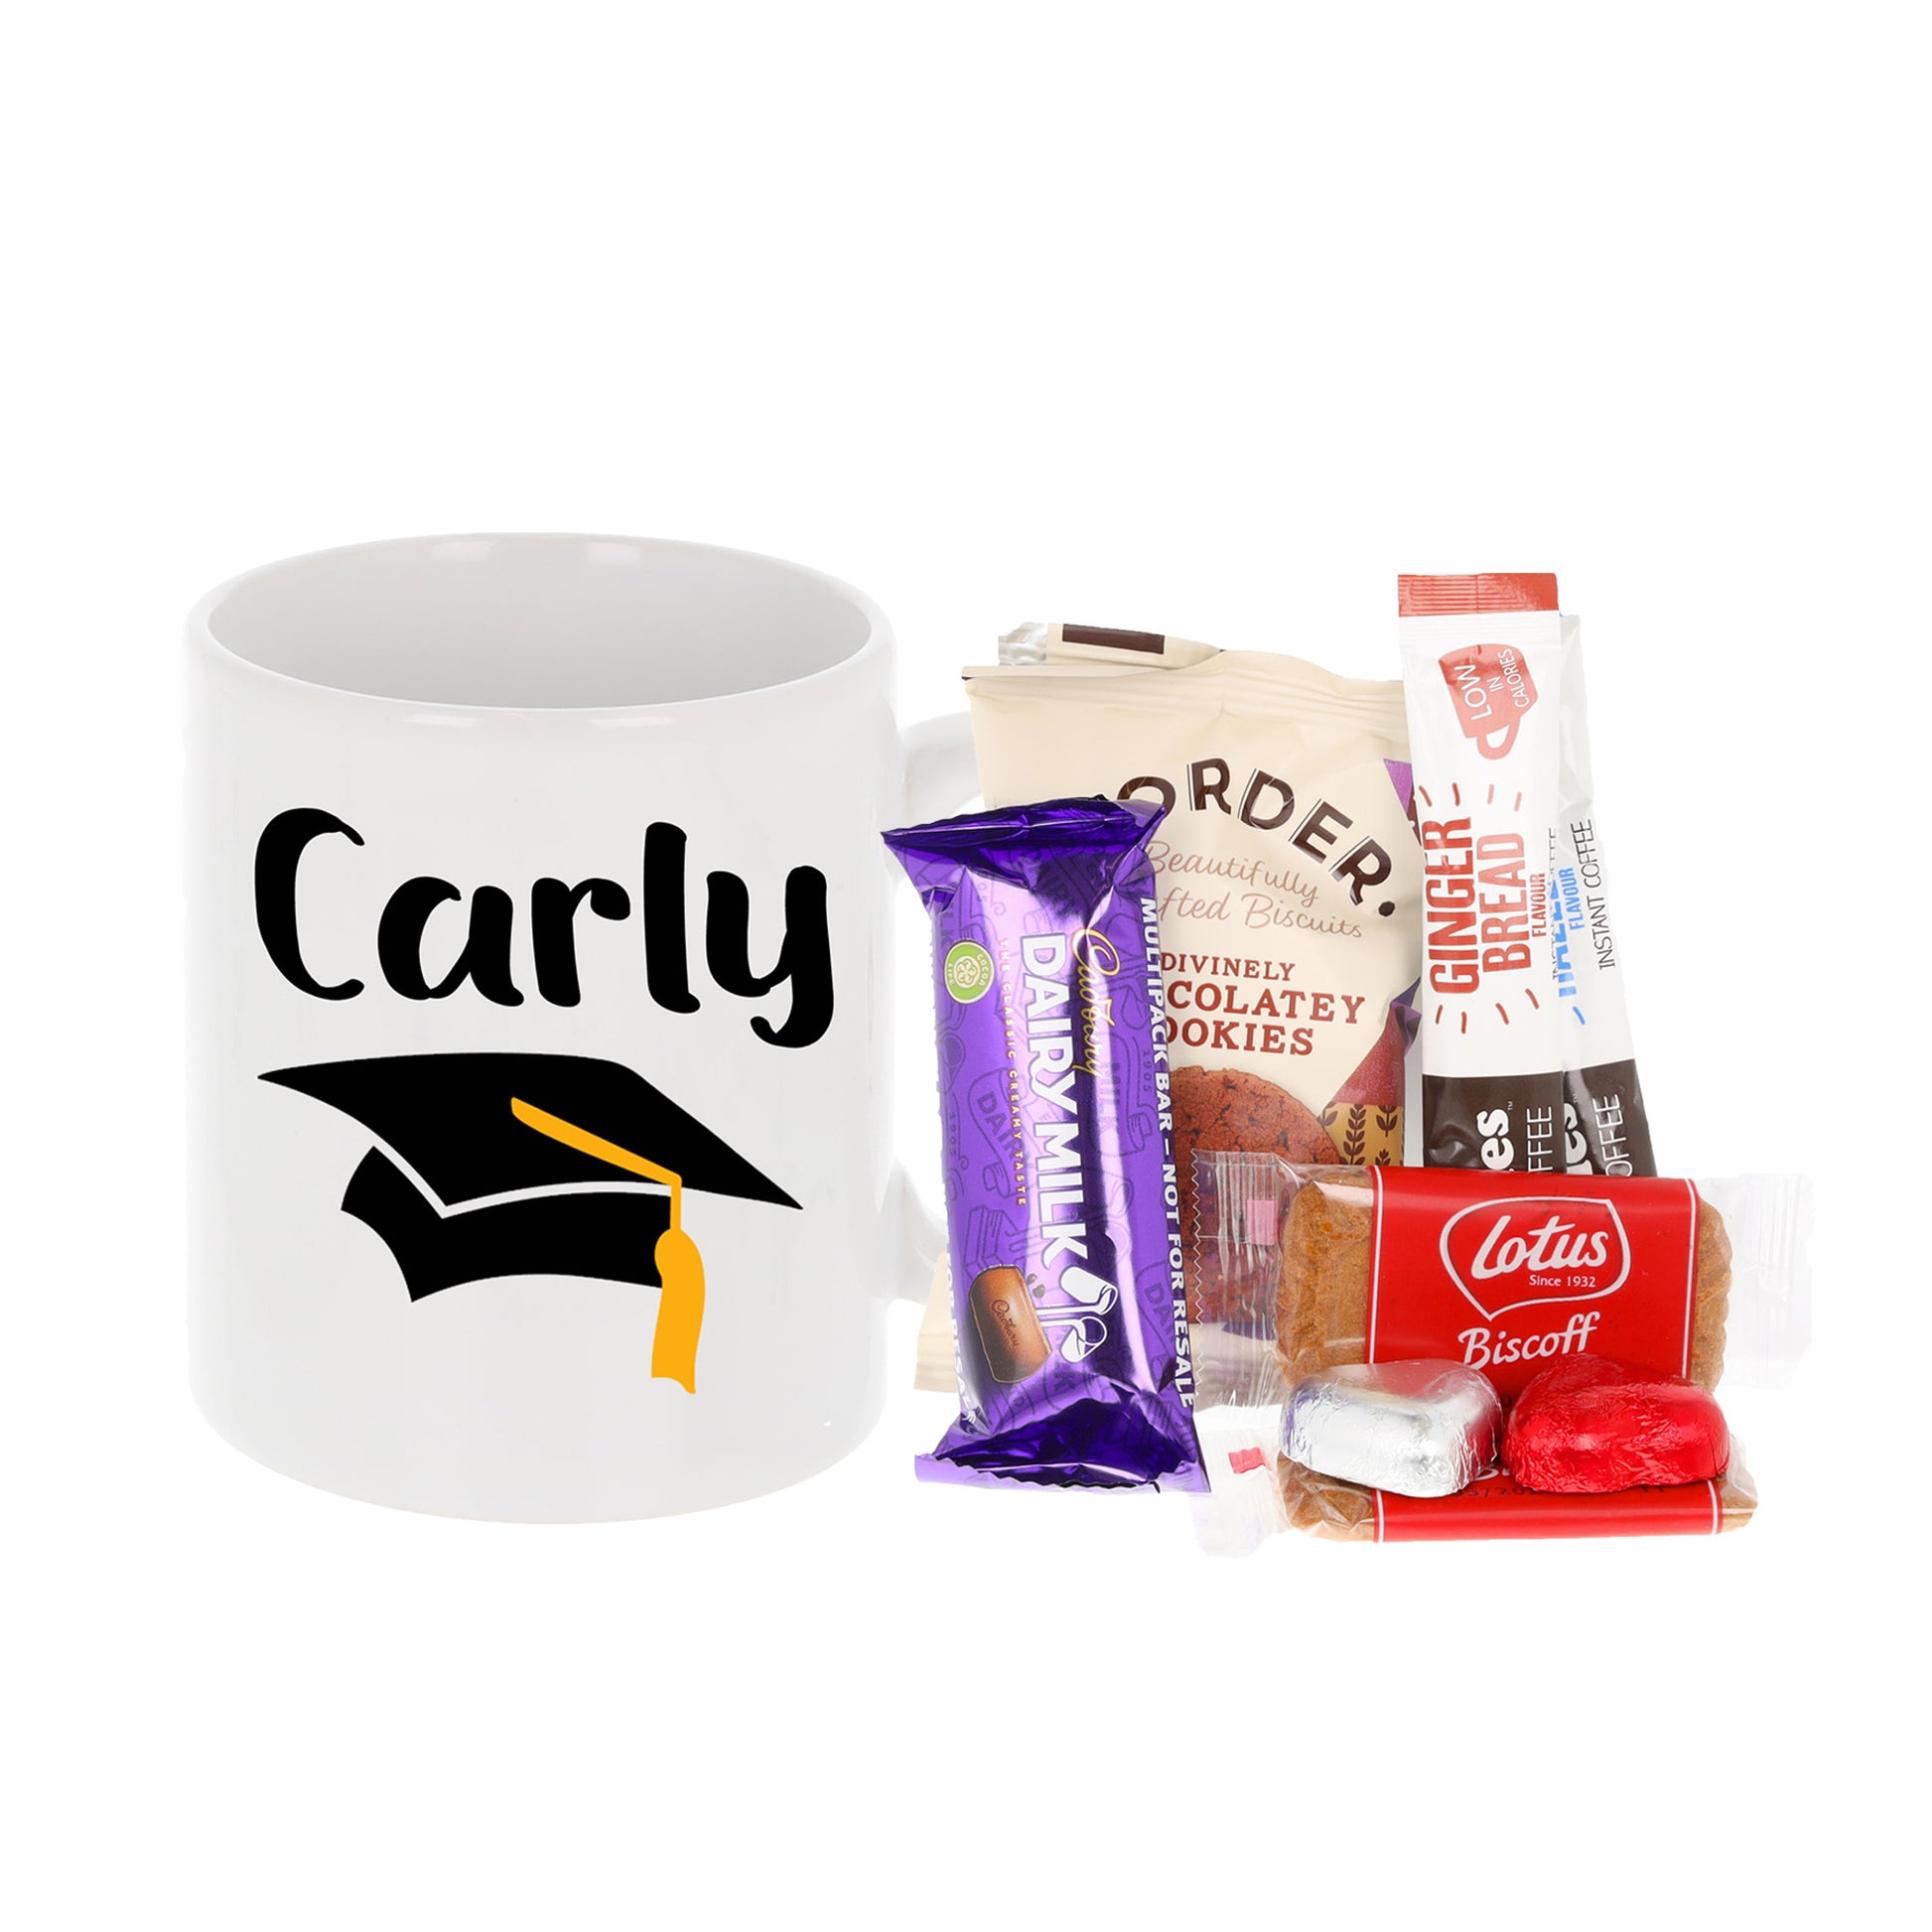 Personalised Graduation Gift Mug & Coaster "Congrats You Did It!" Uni Graduate  - Always Looking Good -   